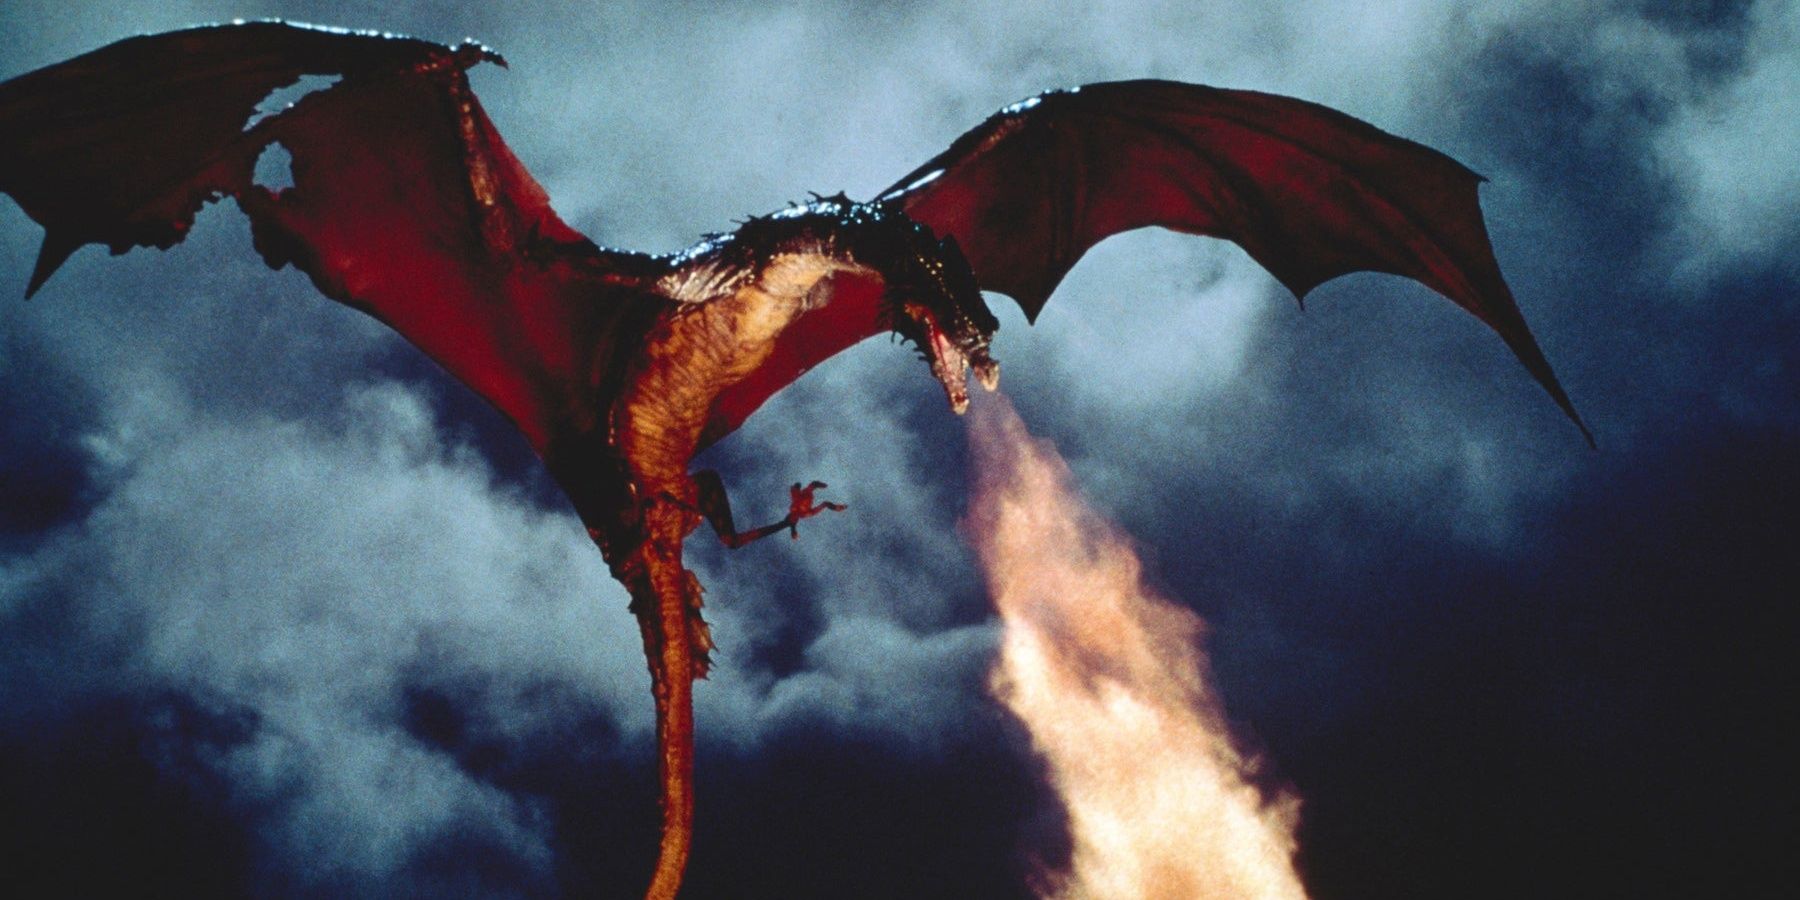 Dragonslayer Vermithrax Breathes Fire